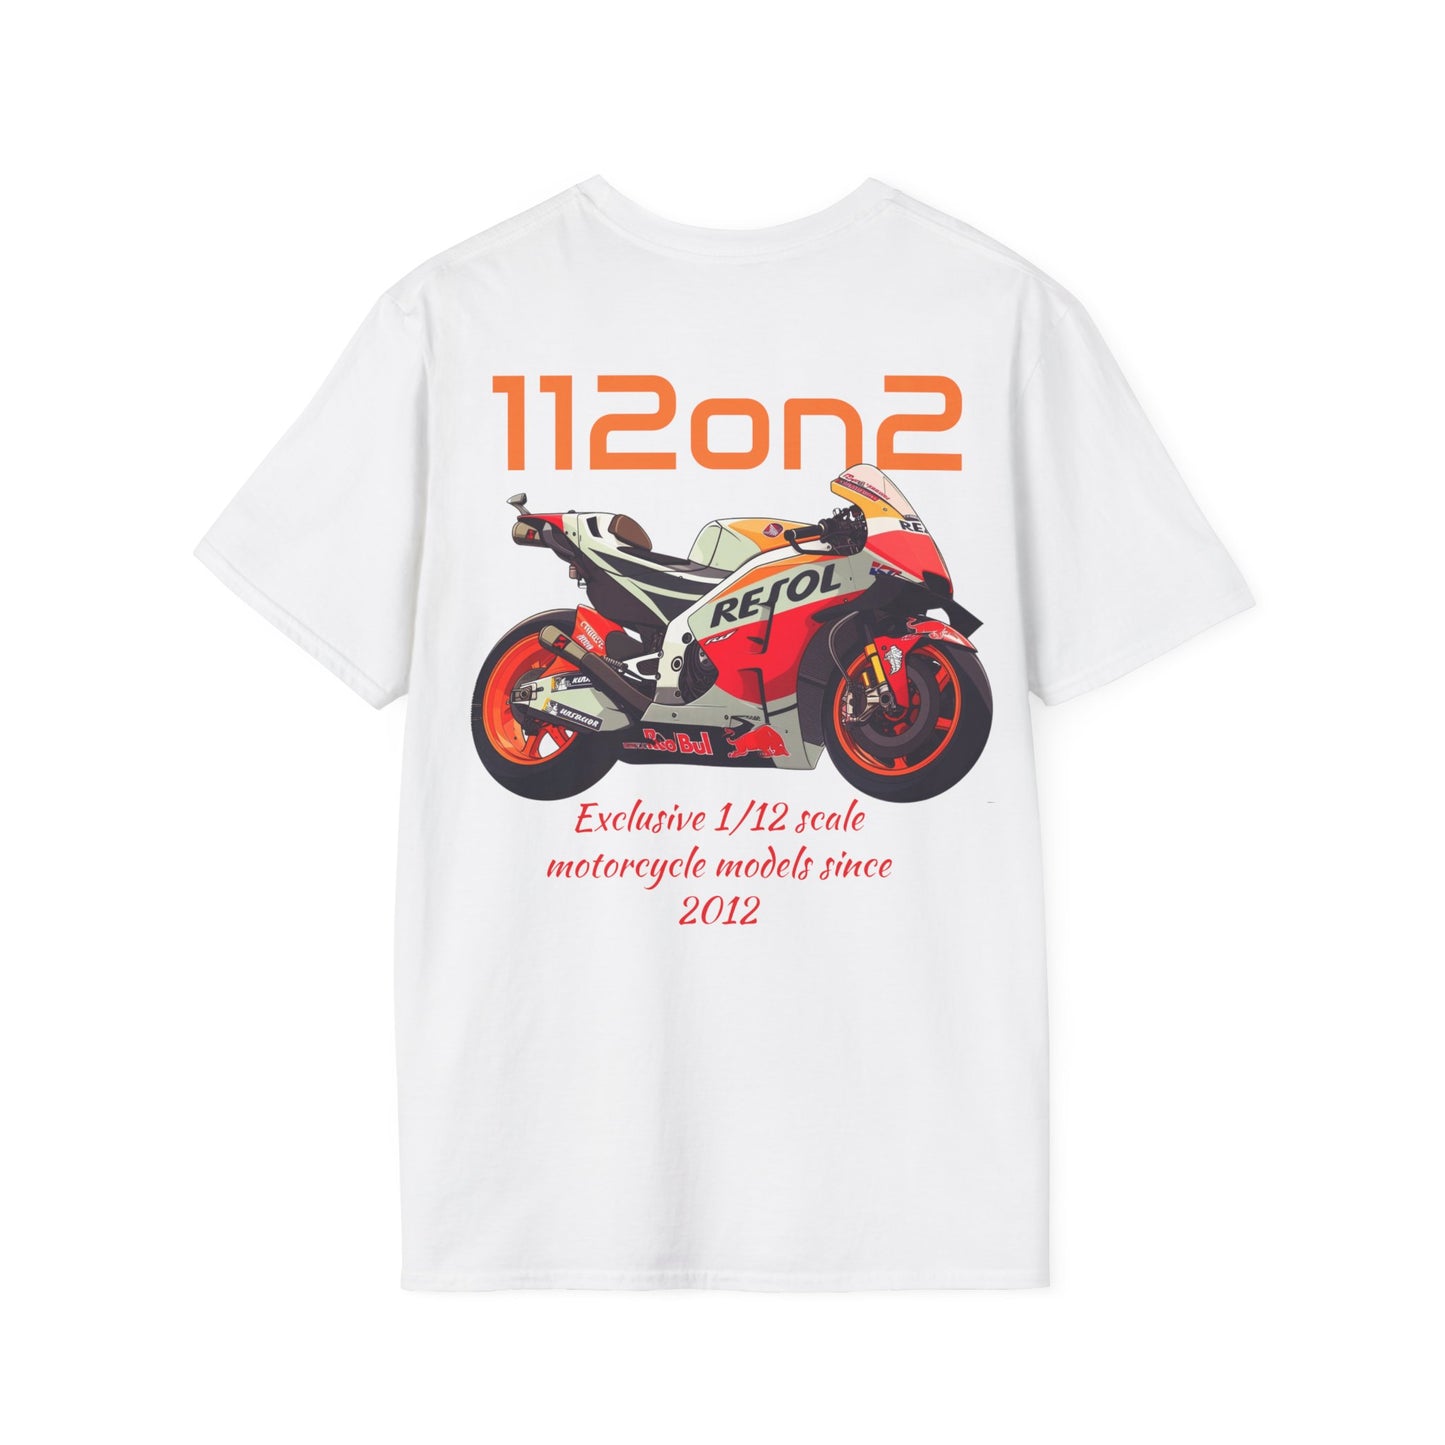 112on2 T-Shirt Cartoon Racing Motorcycle Model V2